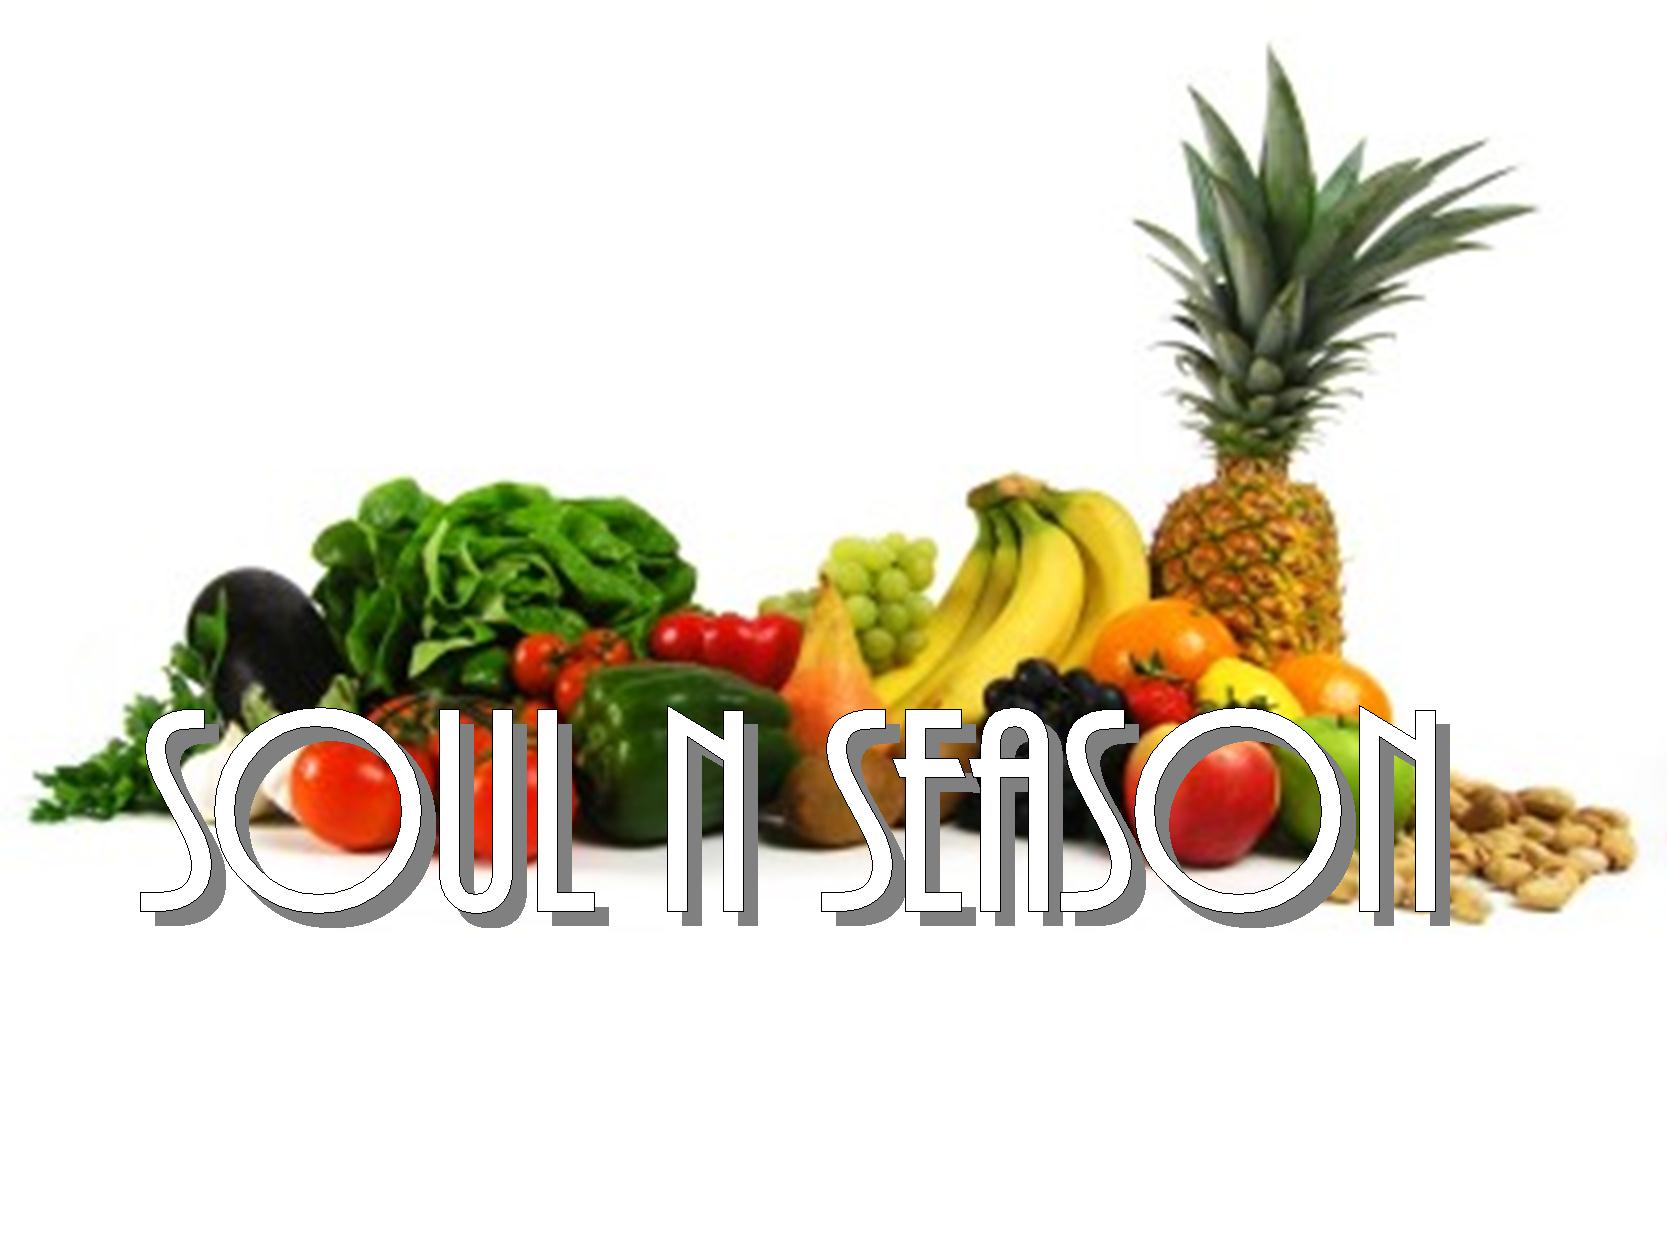 soul food logo